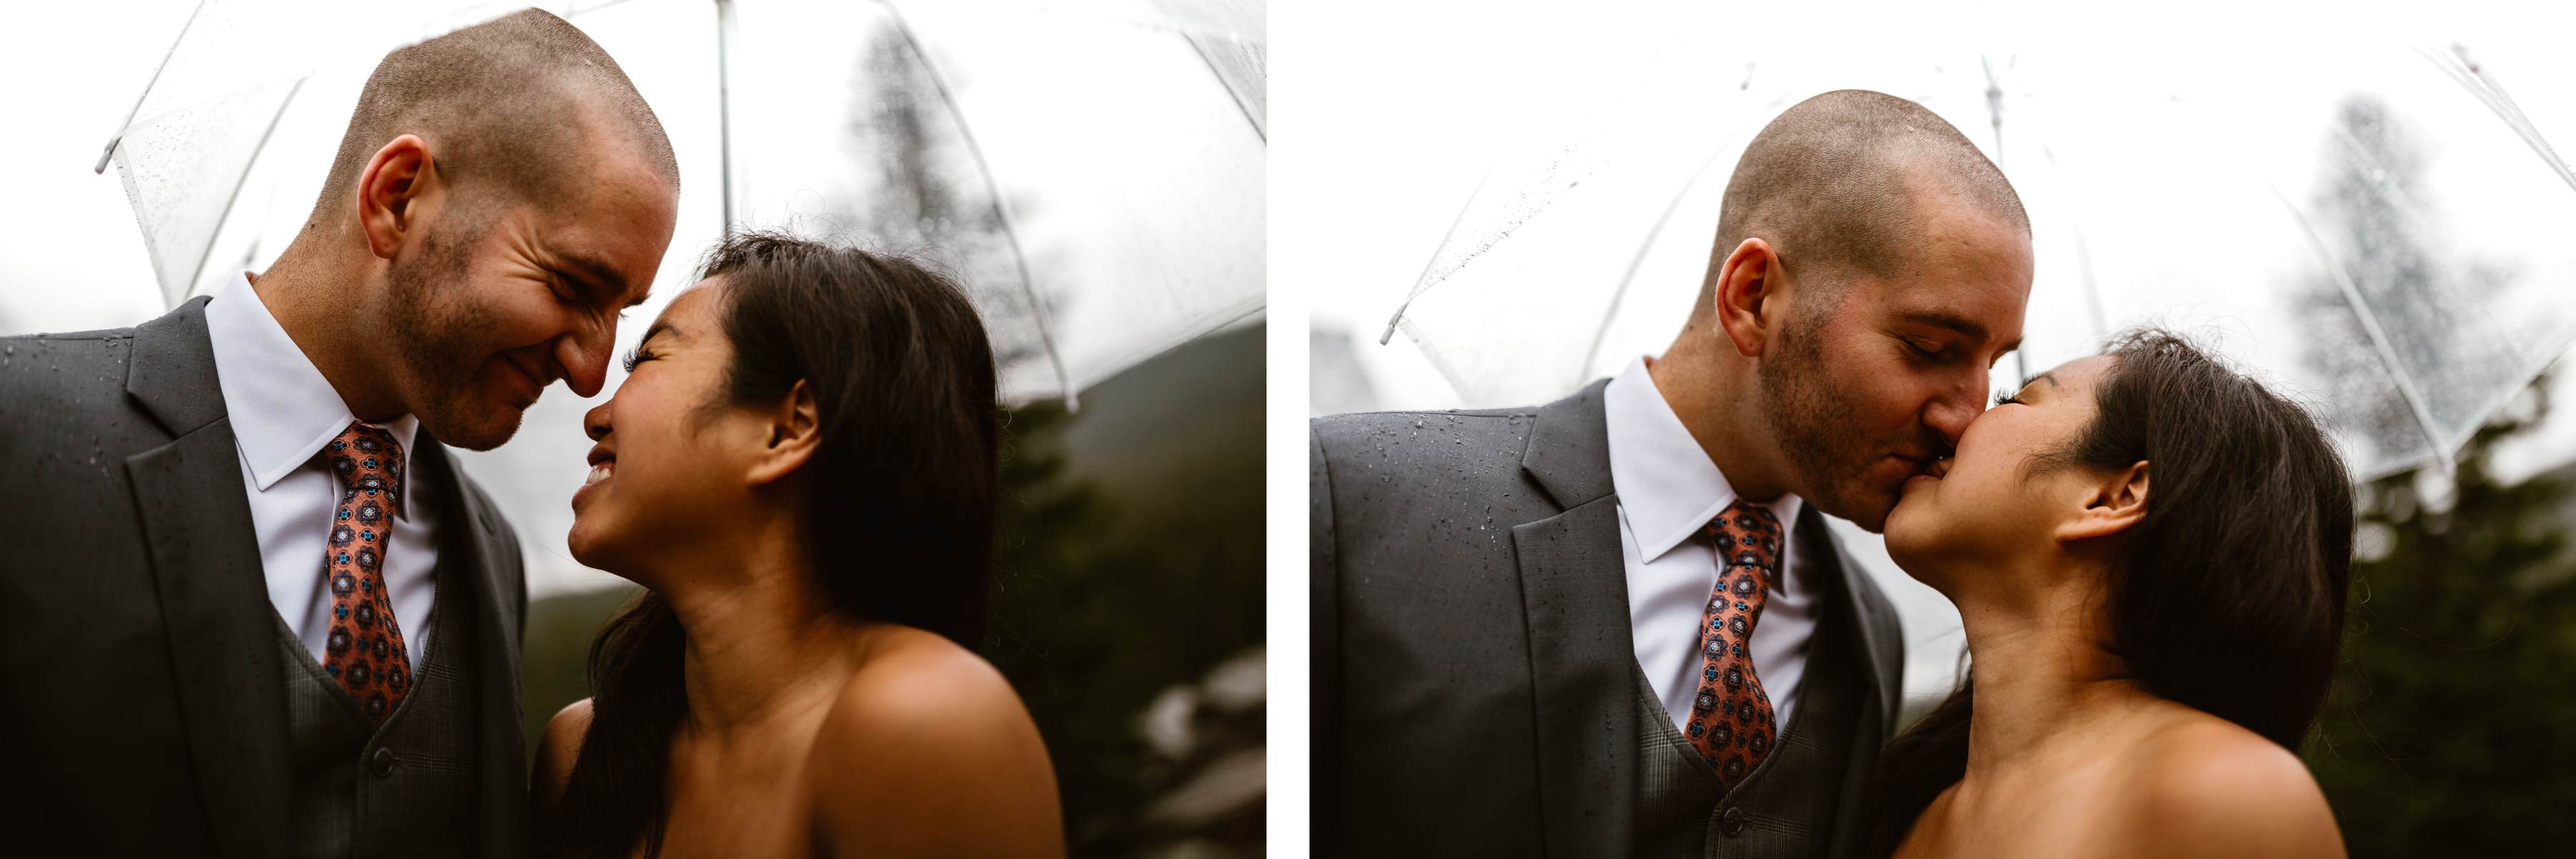 Intimate Wedding Photographers in Banff National Park - Photo 20